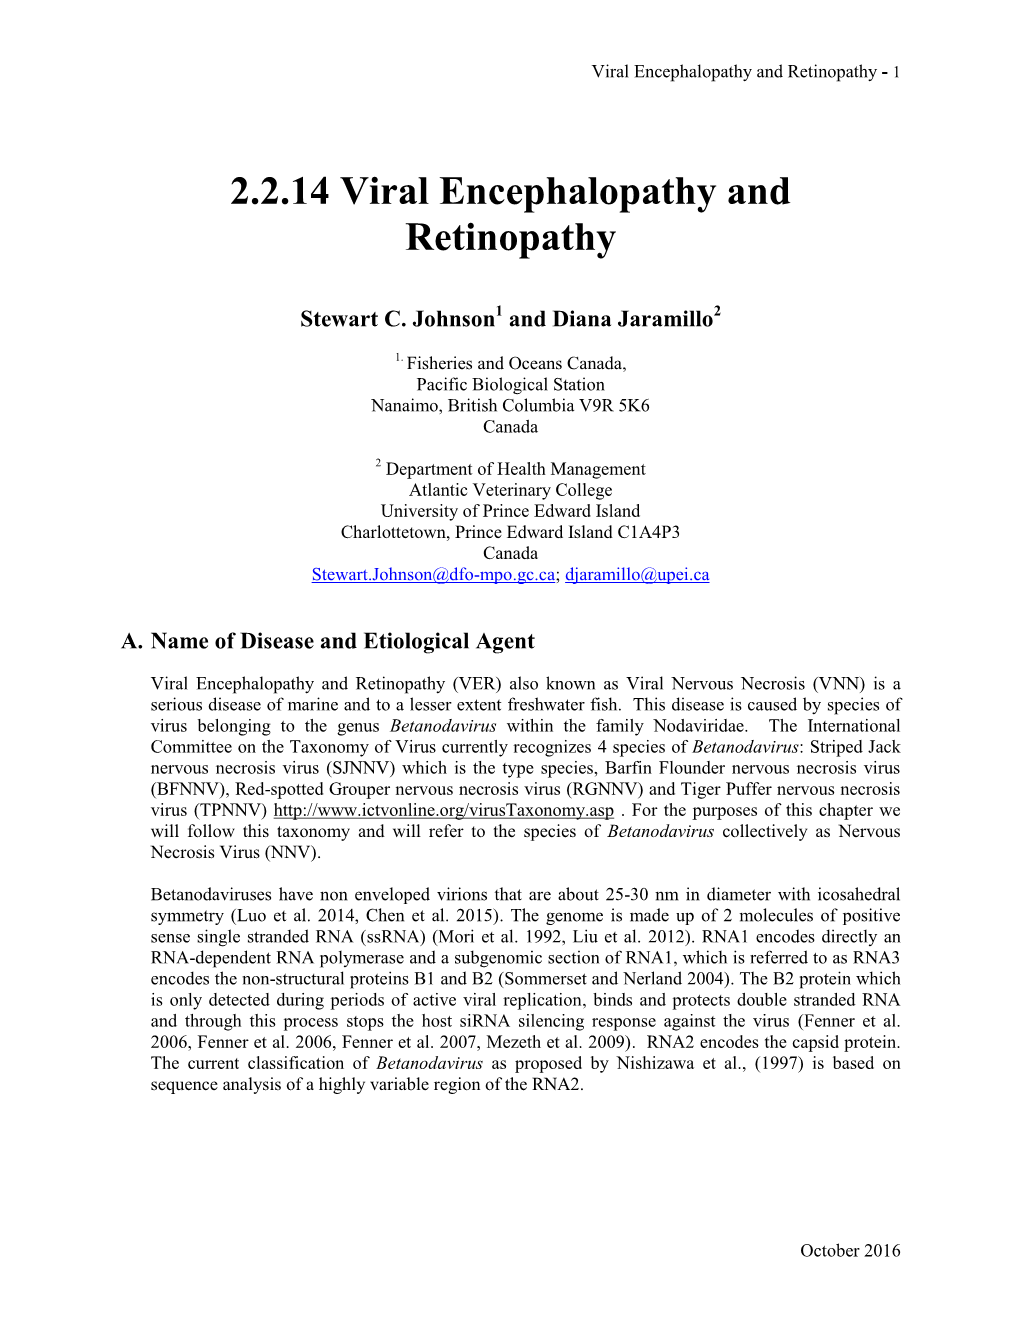 2.2.14 Viral Encephalopathy and Retinopathy